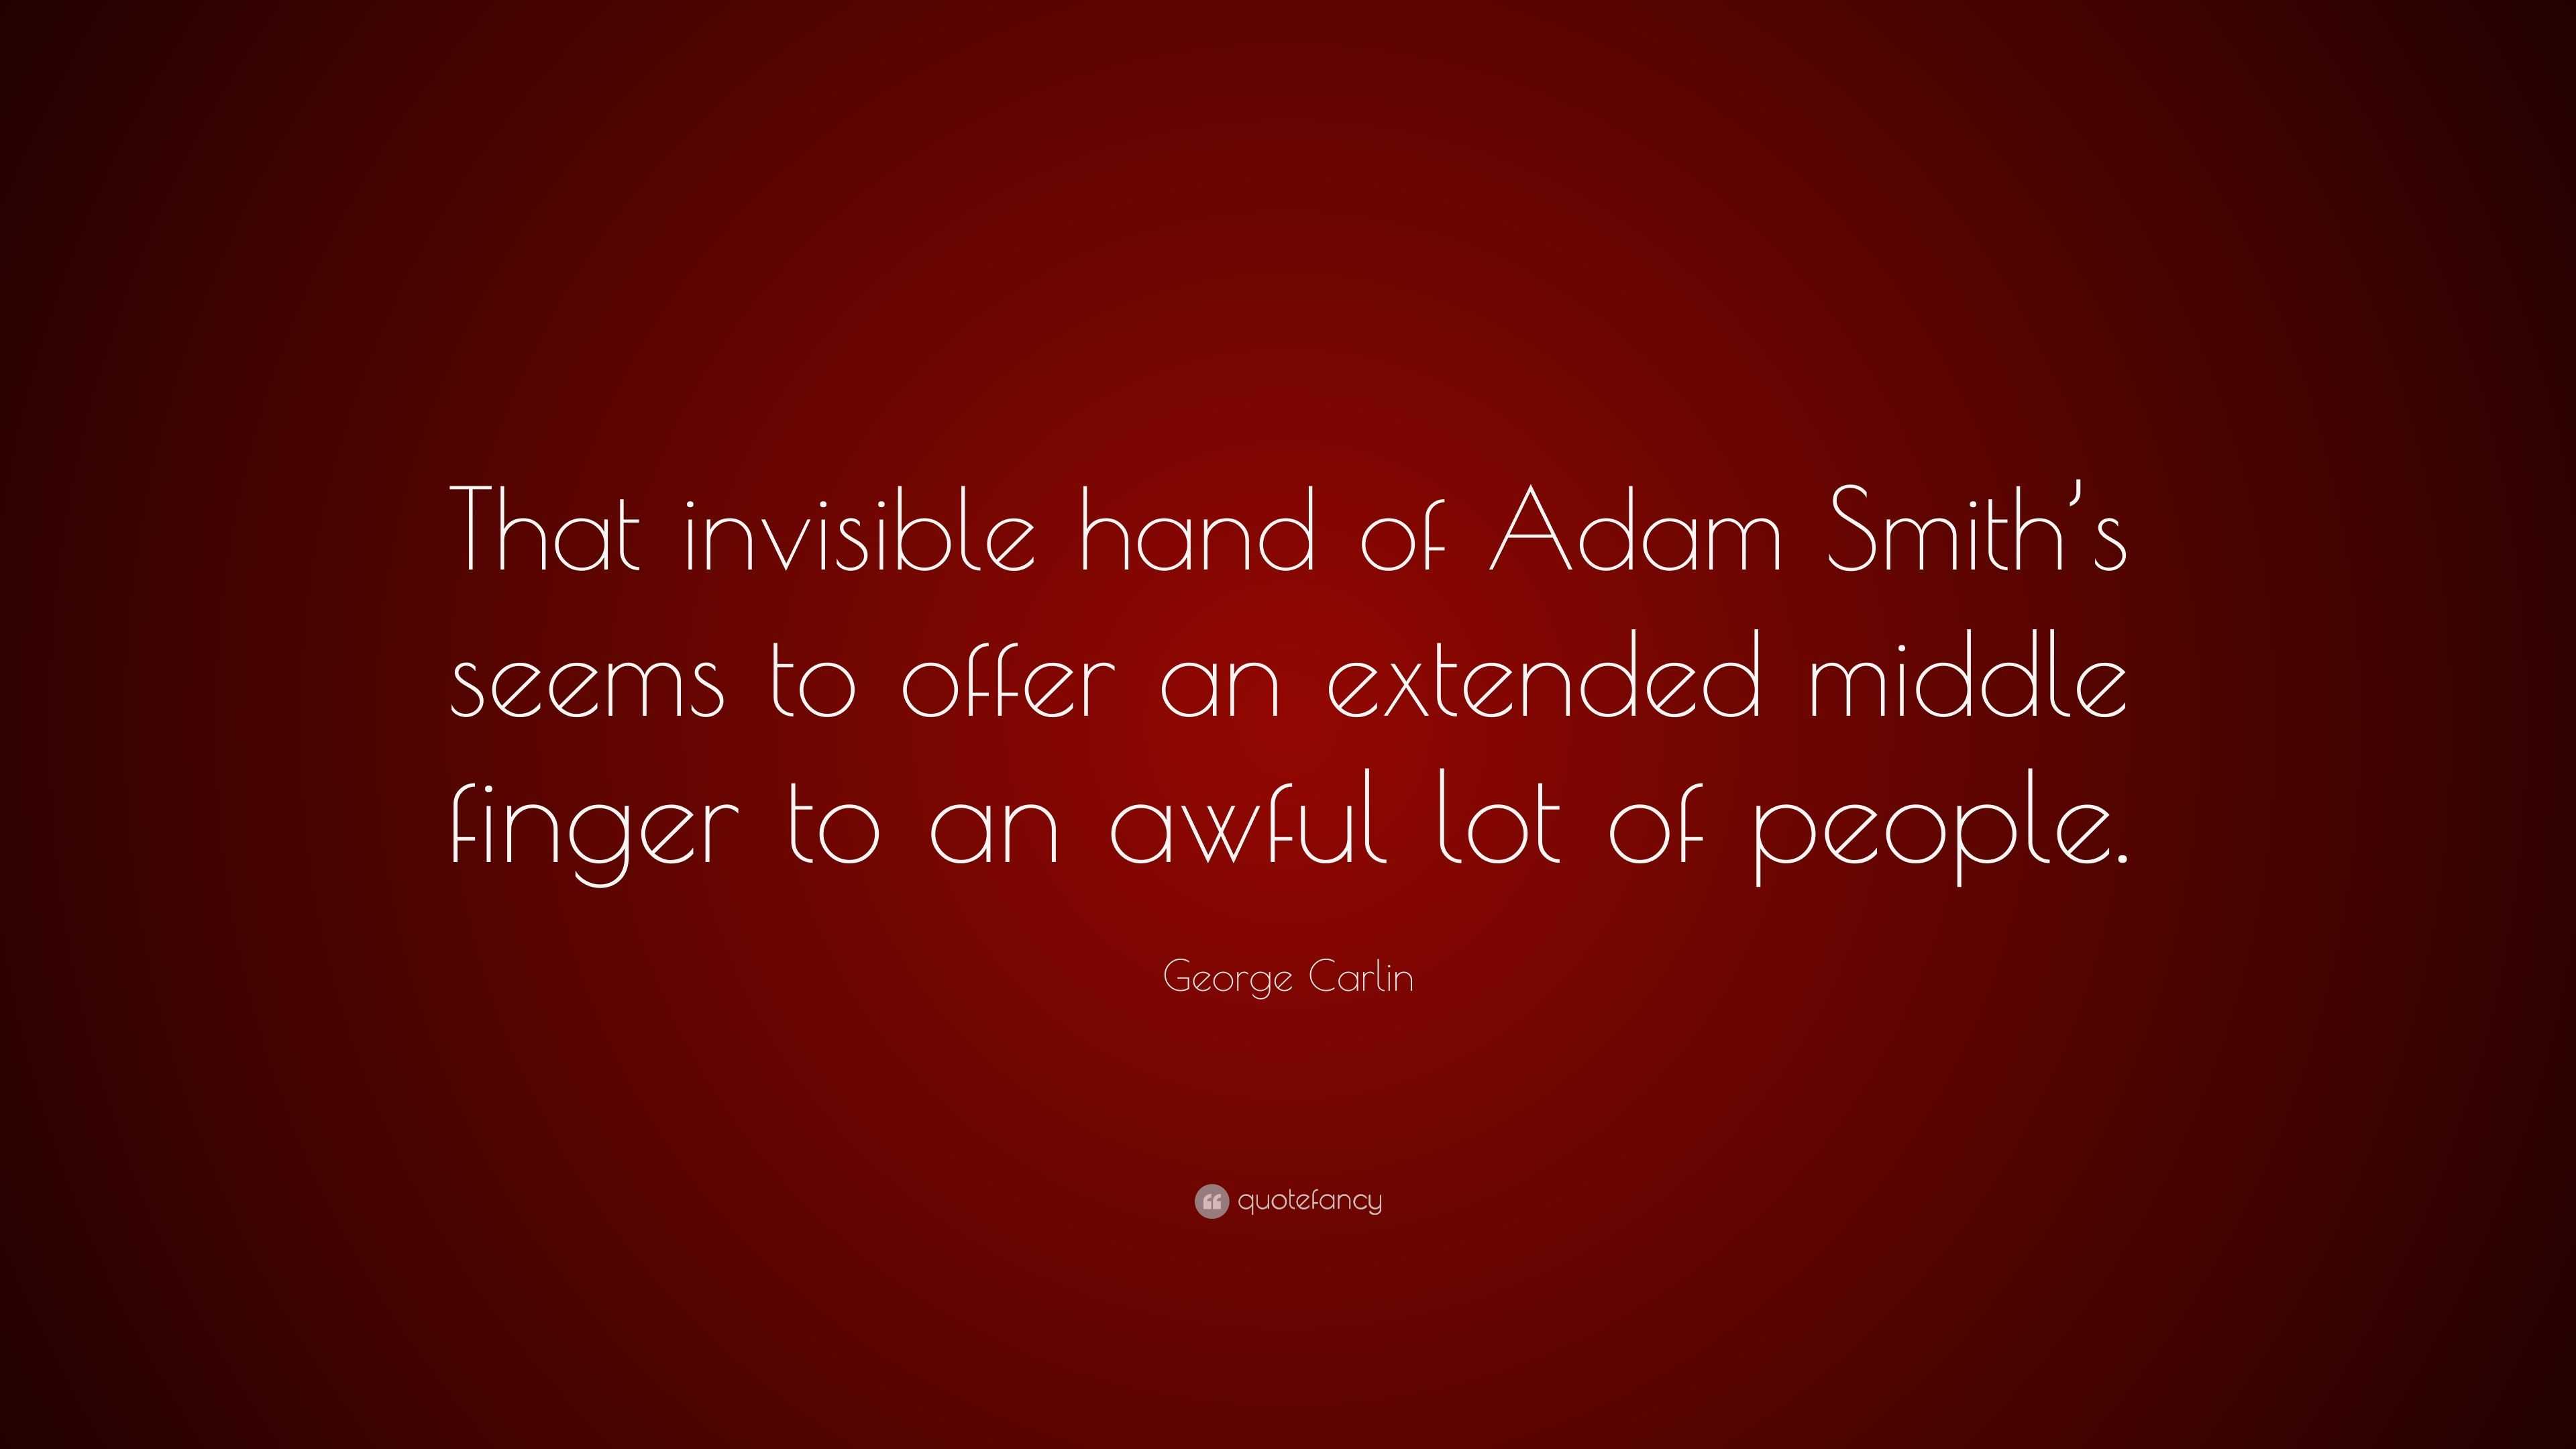 adam smith invisible hand handout